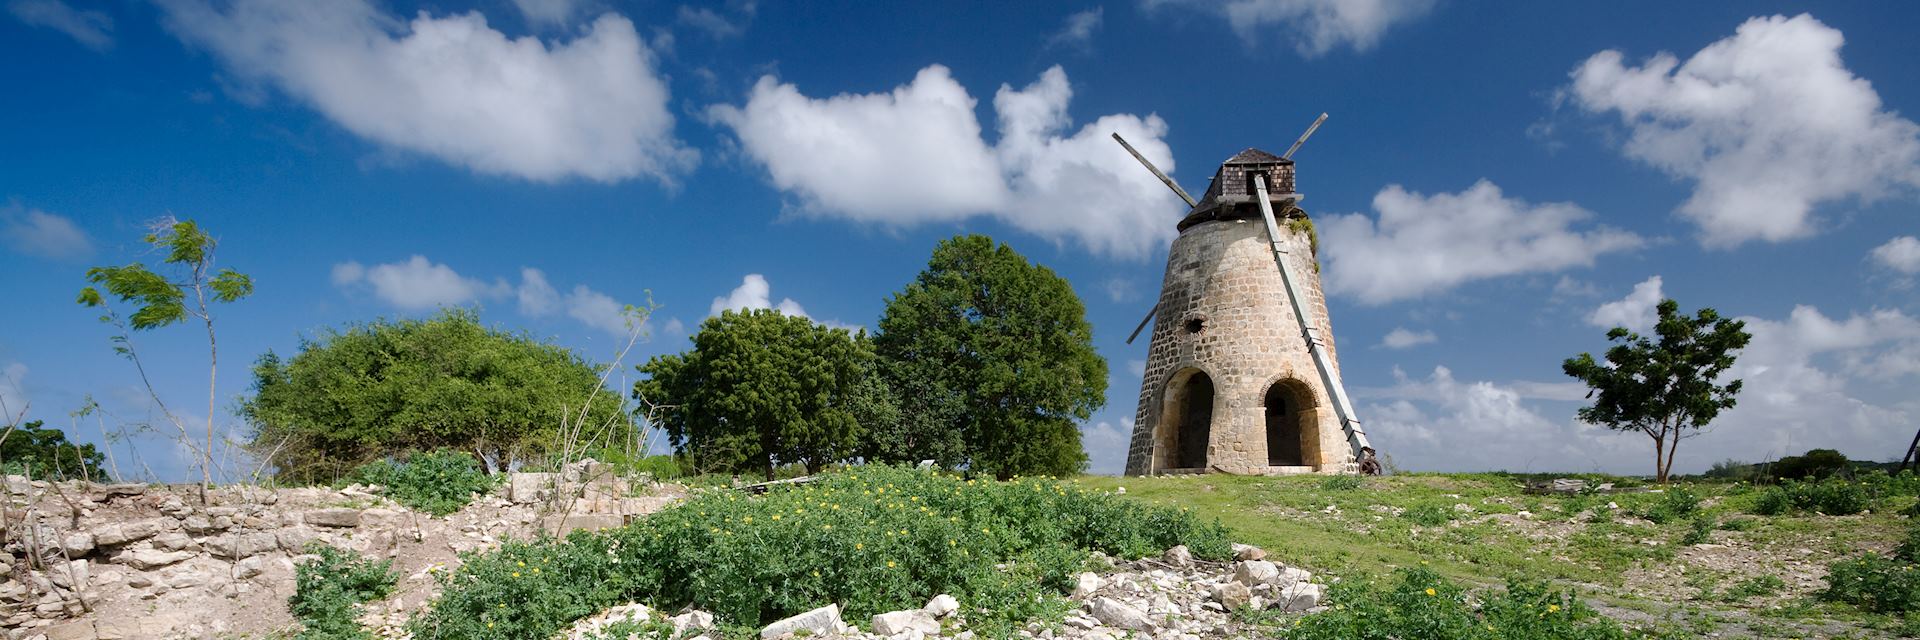 Windmill on Antigua